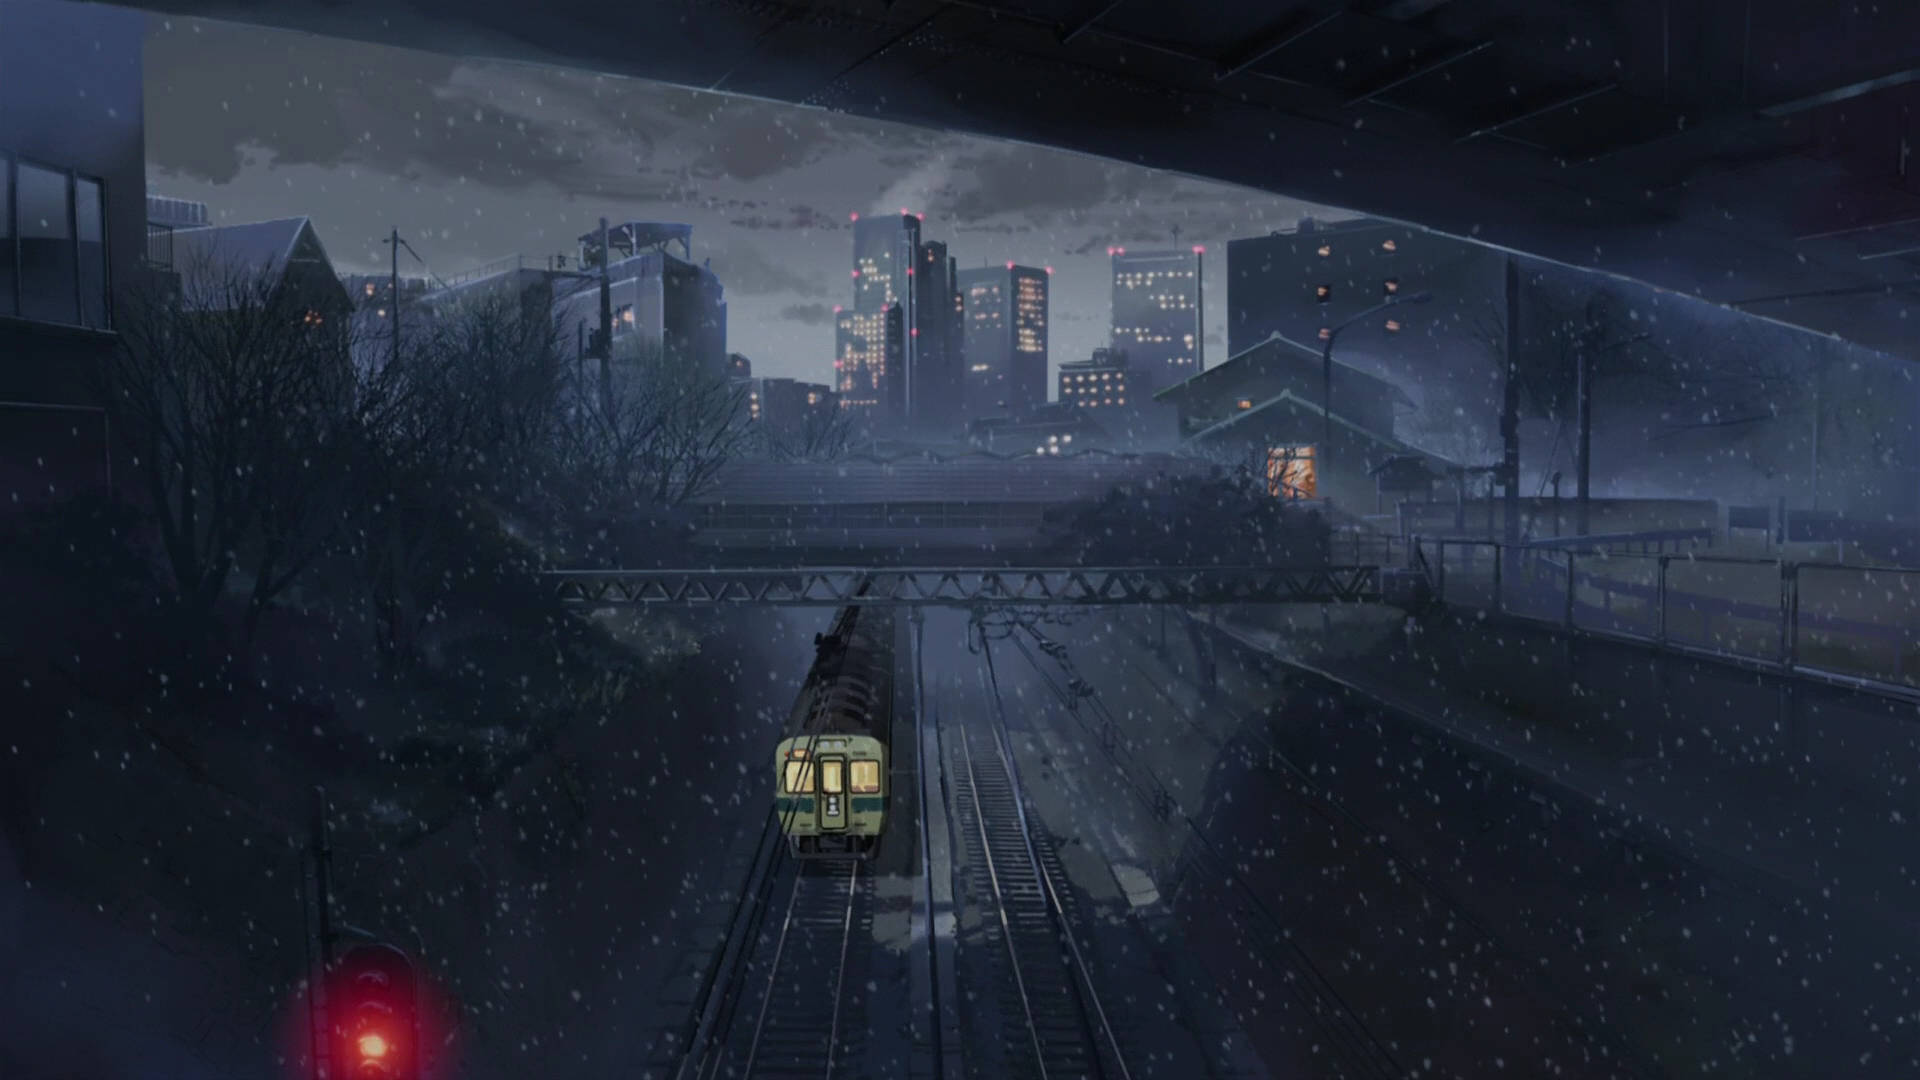 Makoto Shinkai Winter Night Aesthetic Wallpaper